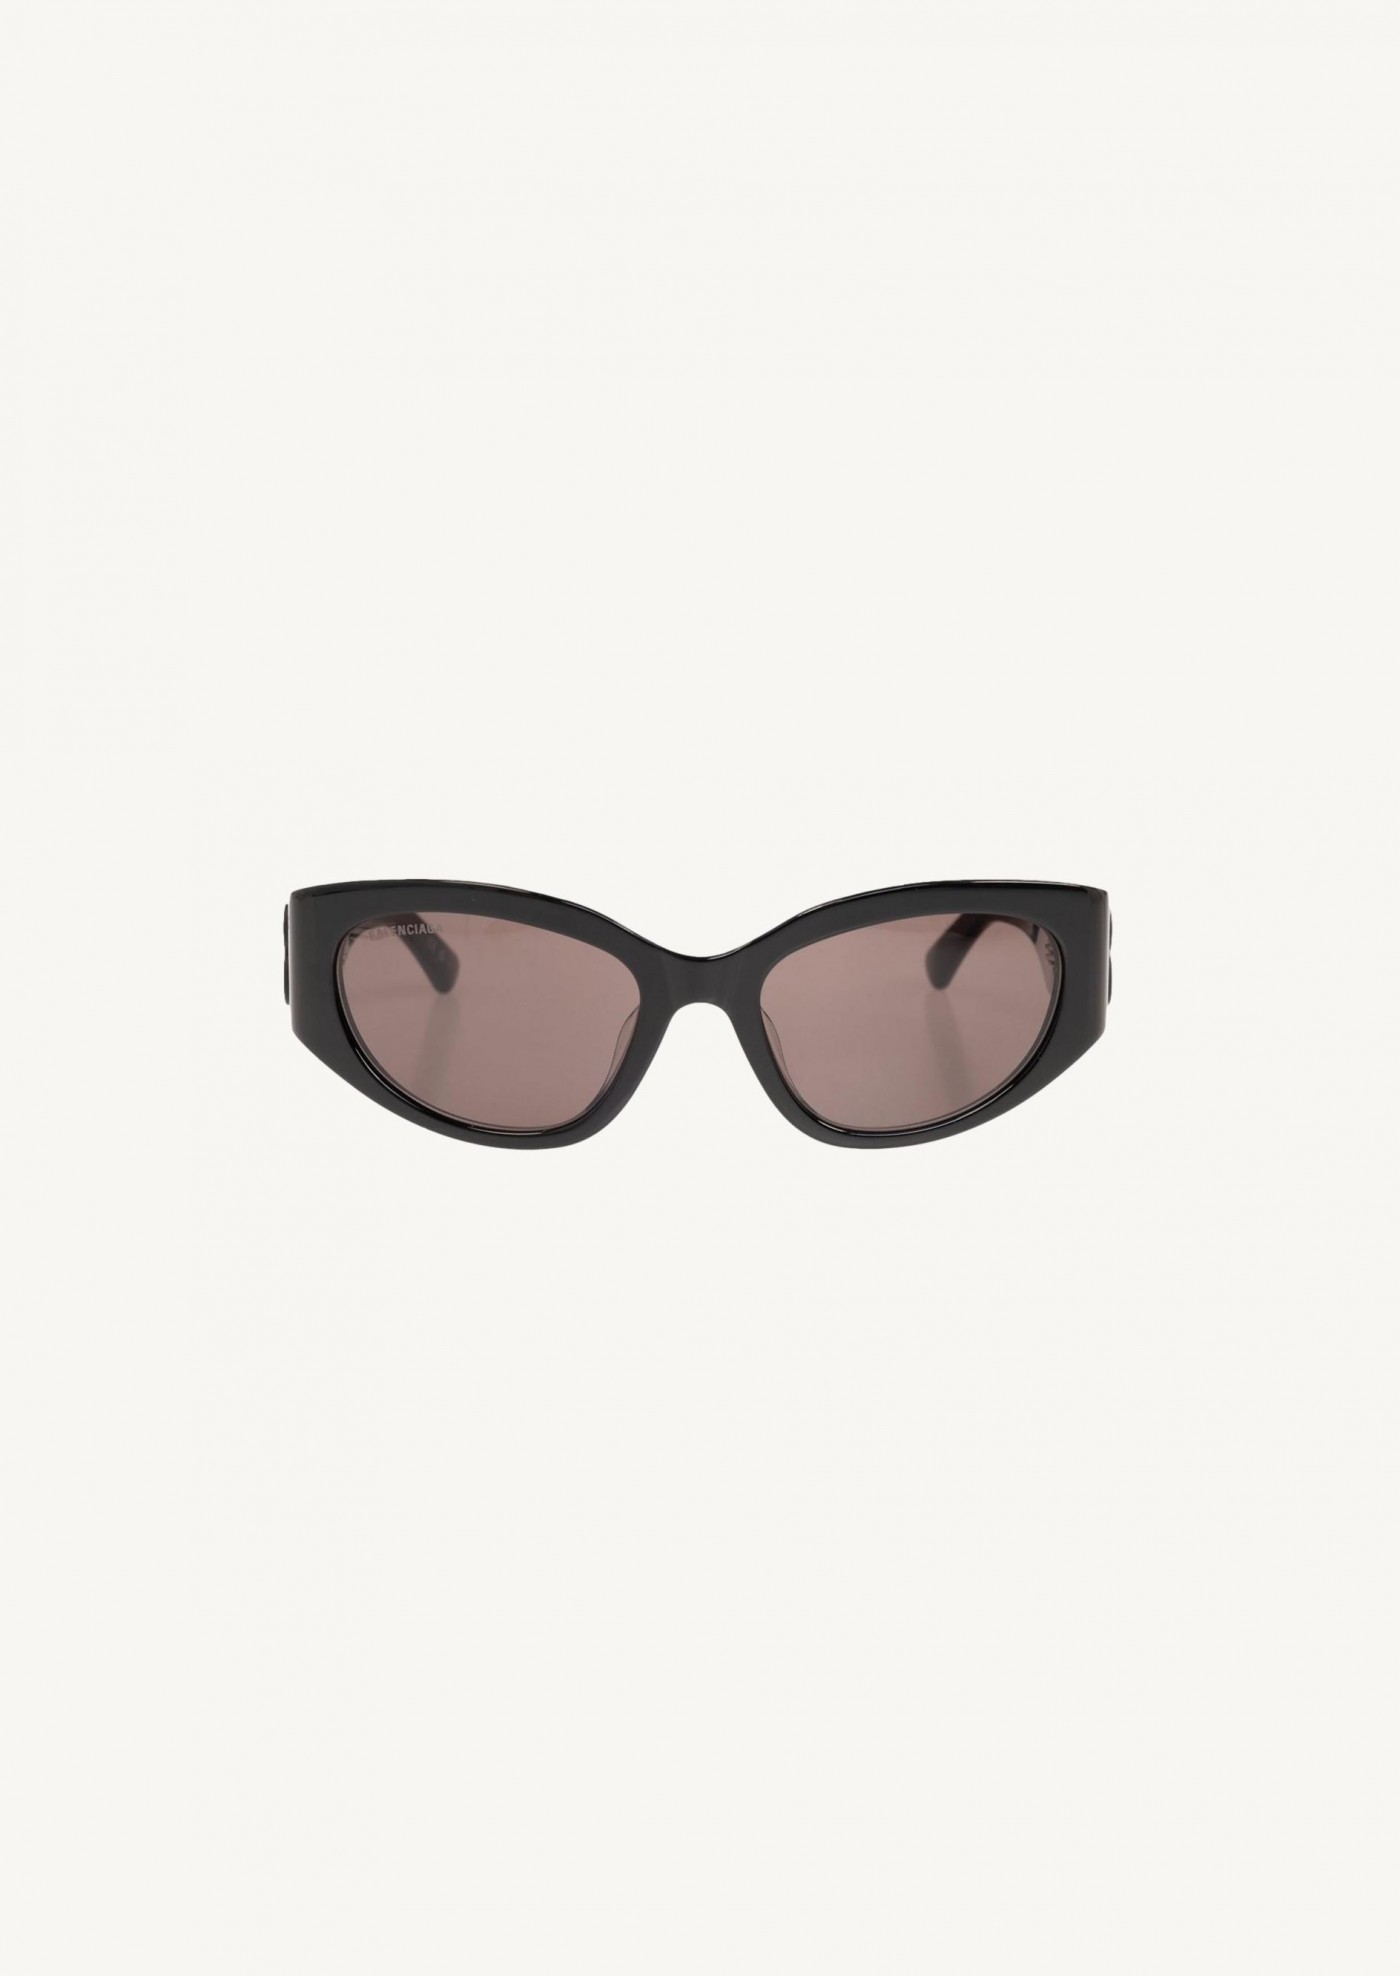 Black sunglasses from Balenciaga